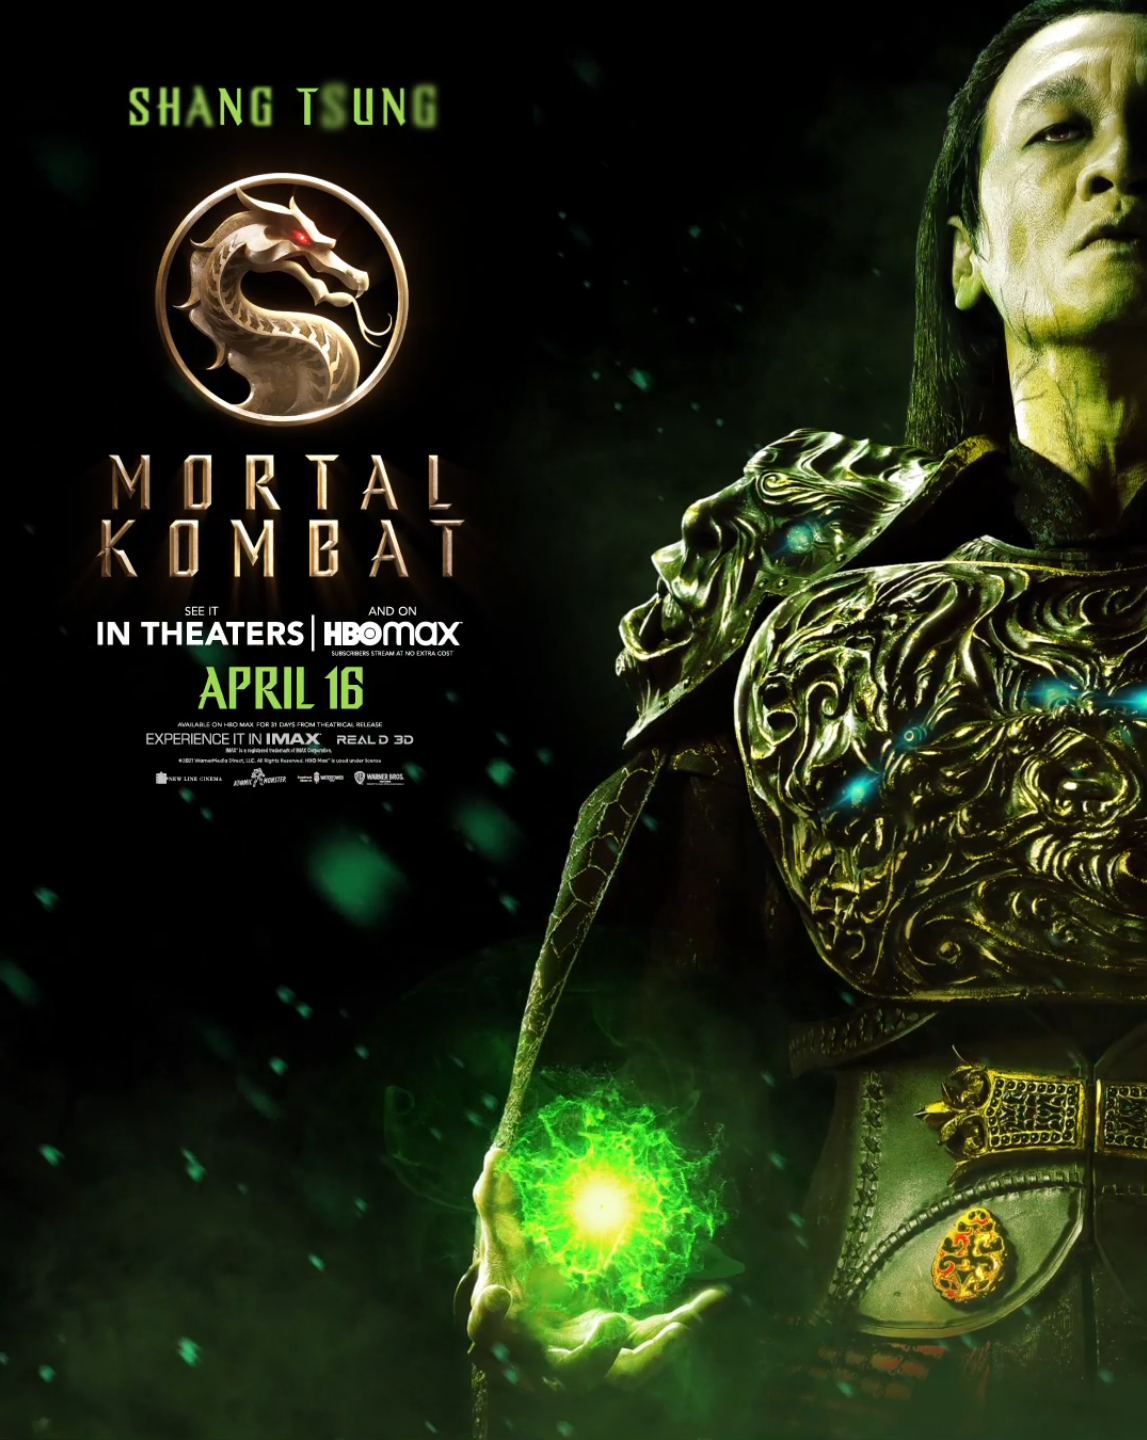 Mortal Kombat 11 Shang Tsung hands-on impressions: He's got all